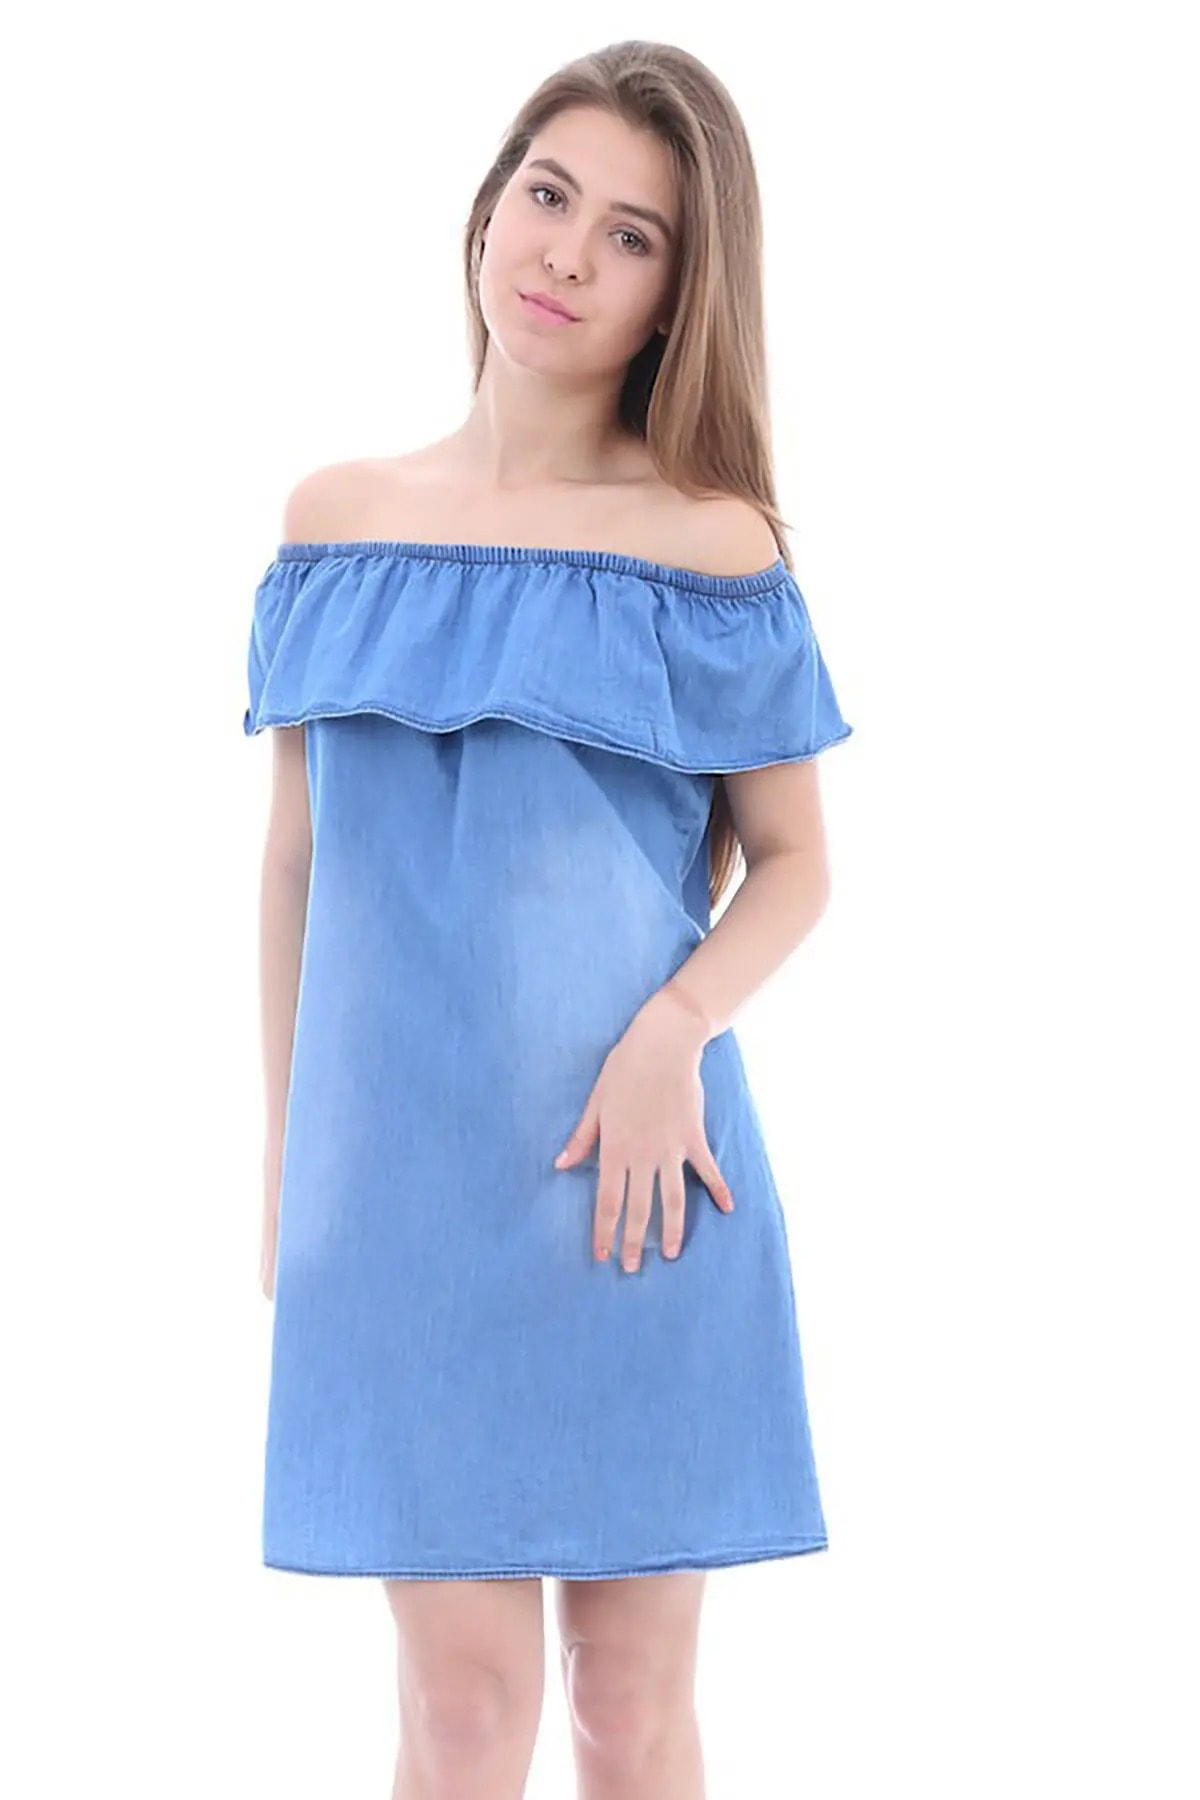 Bigdart Women's Light Shoulder Dark Blue Denim Dress 1481